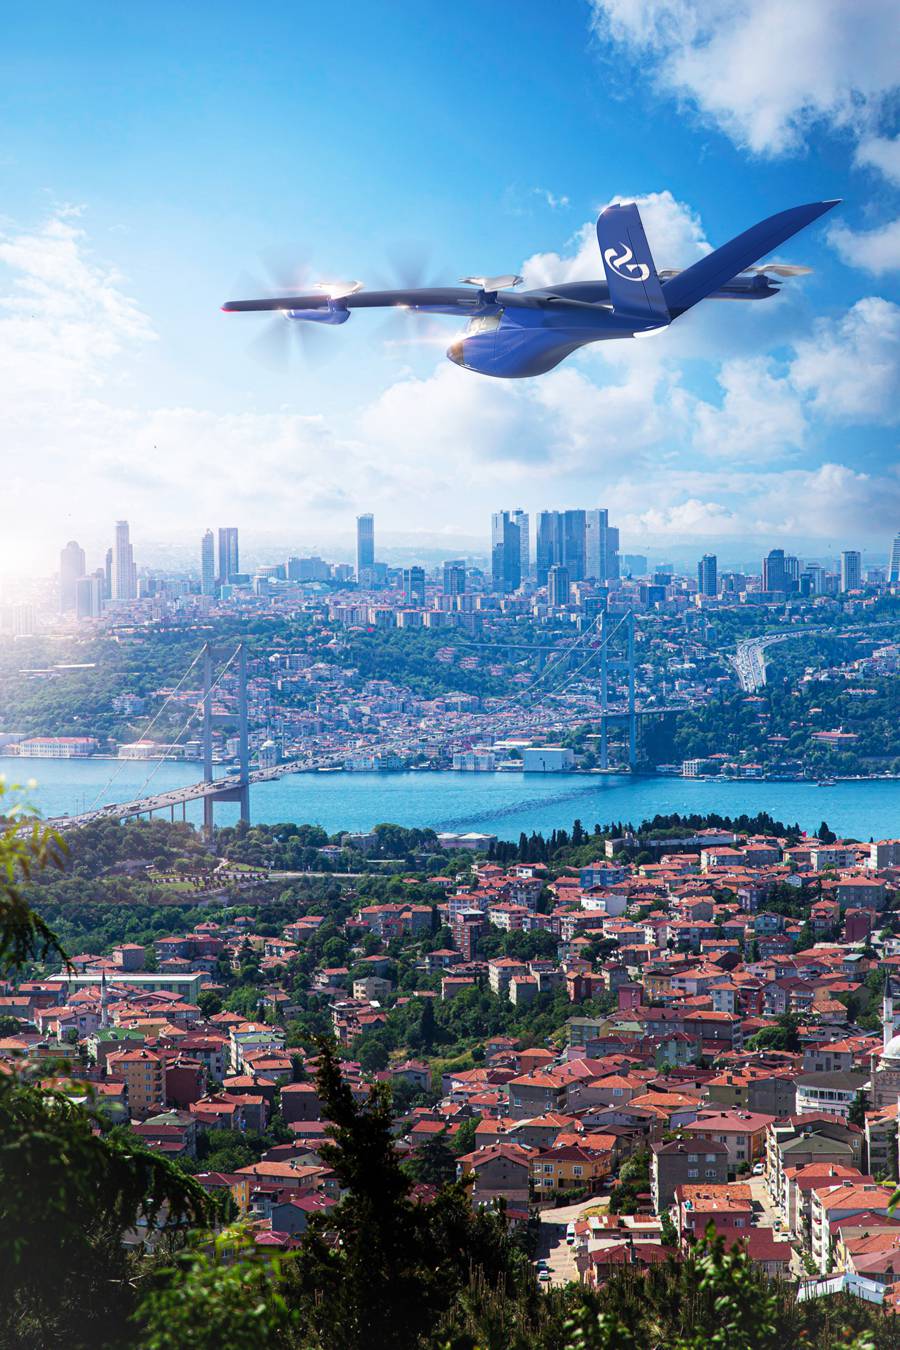 Turkey orders 100 Vx4 Avolon eVTOL aircraft for Zero Emissions Air Travel